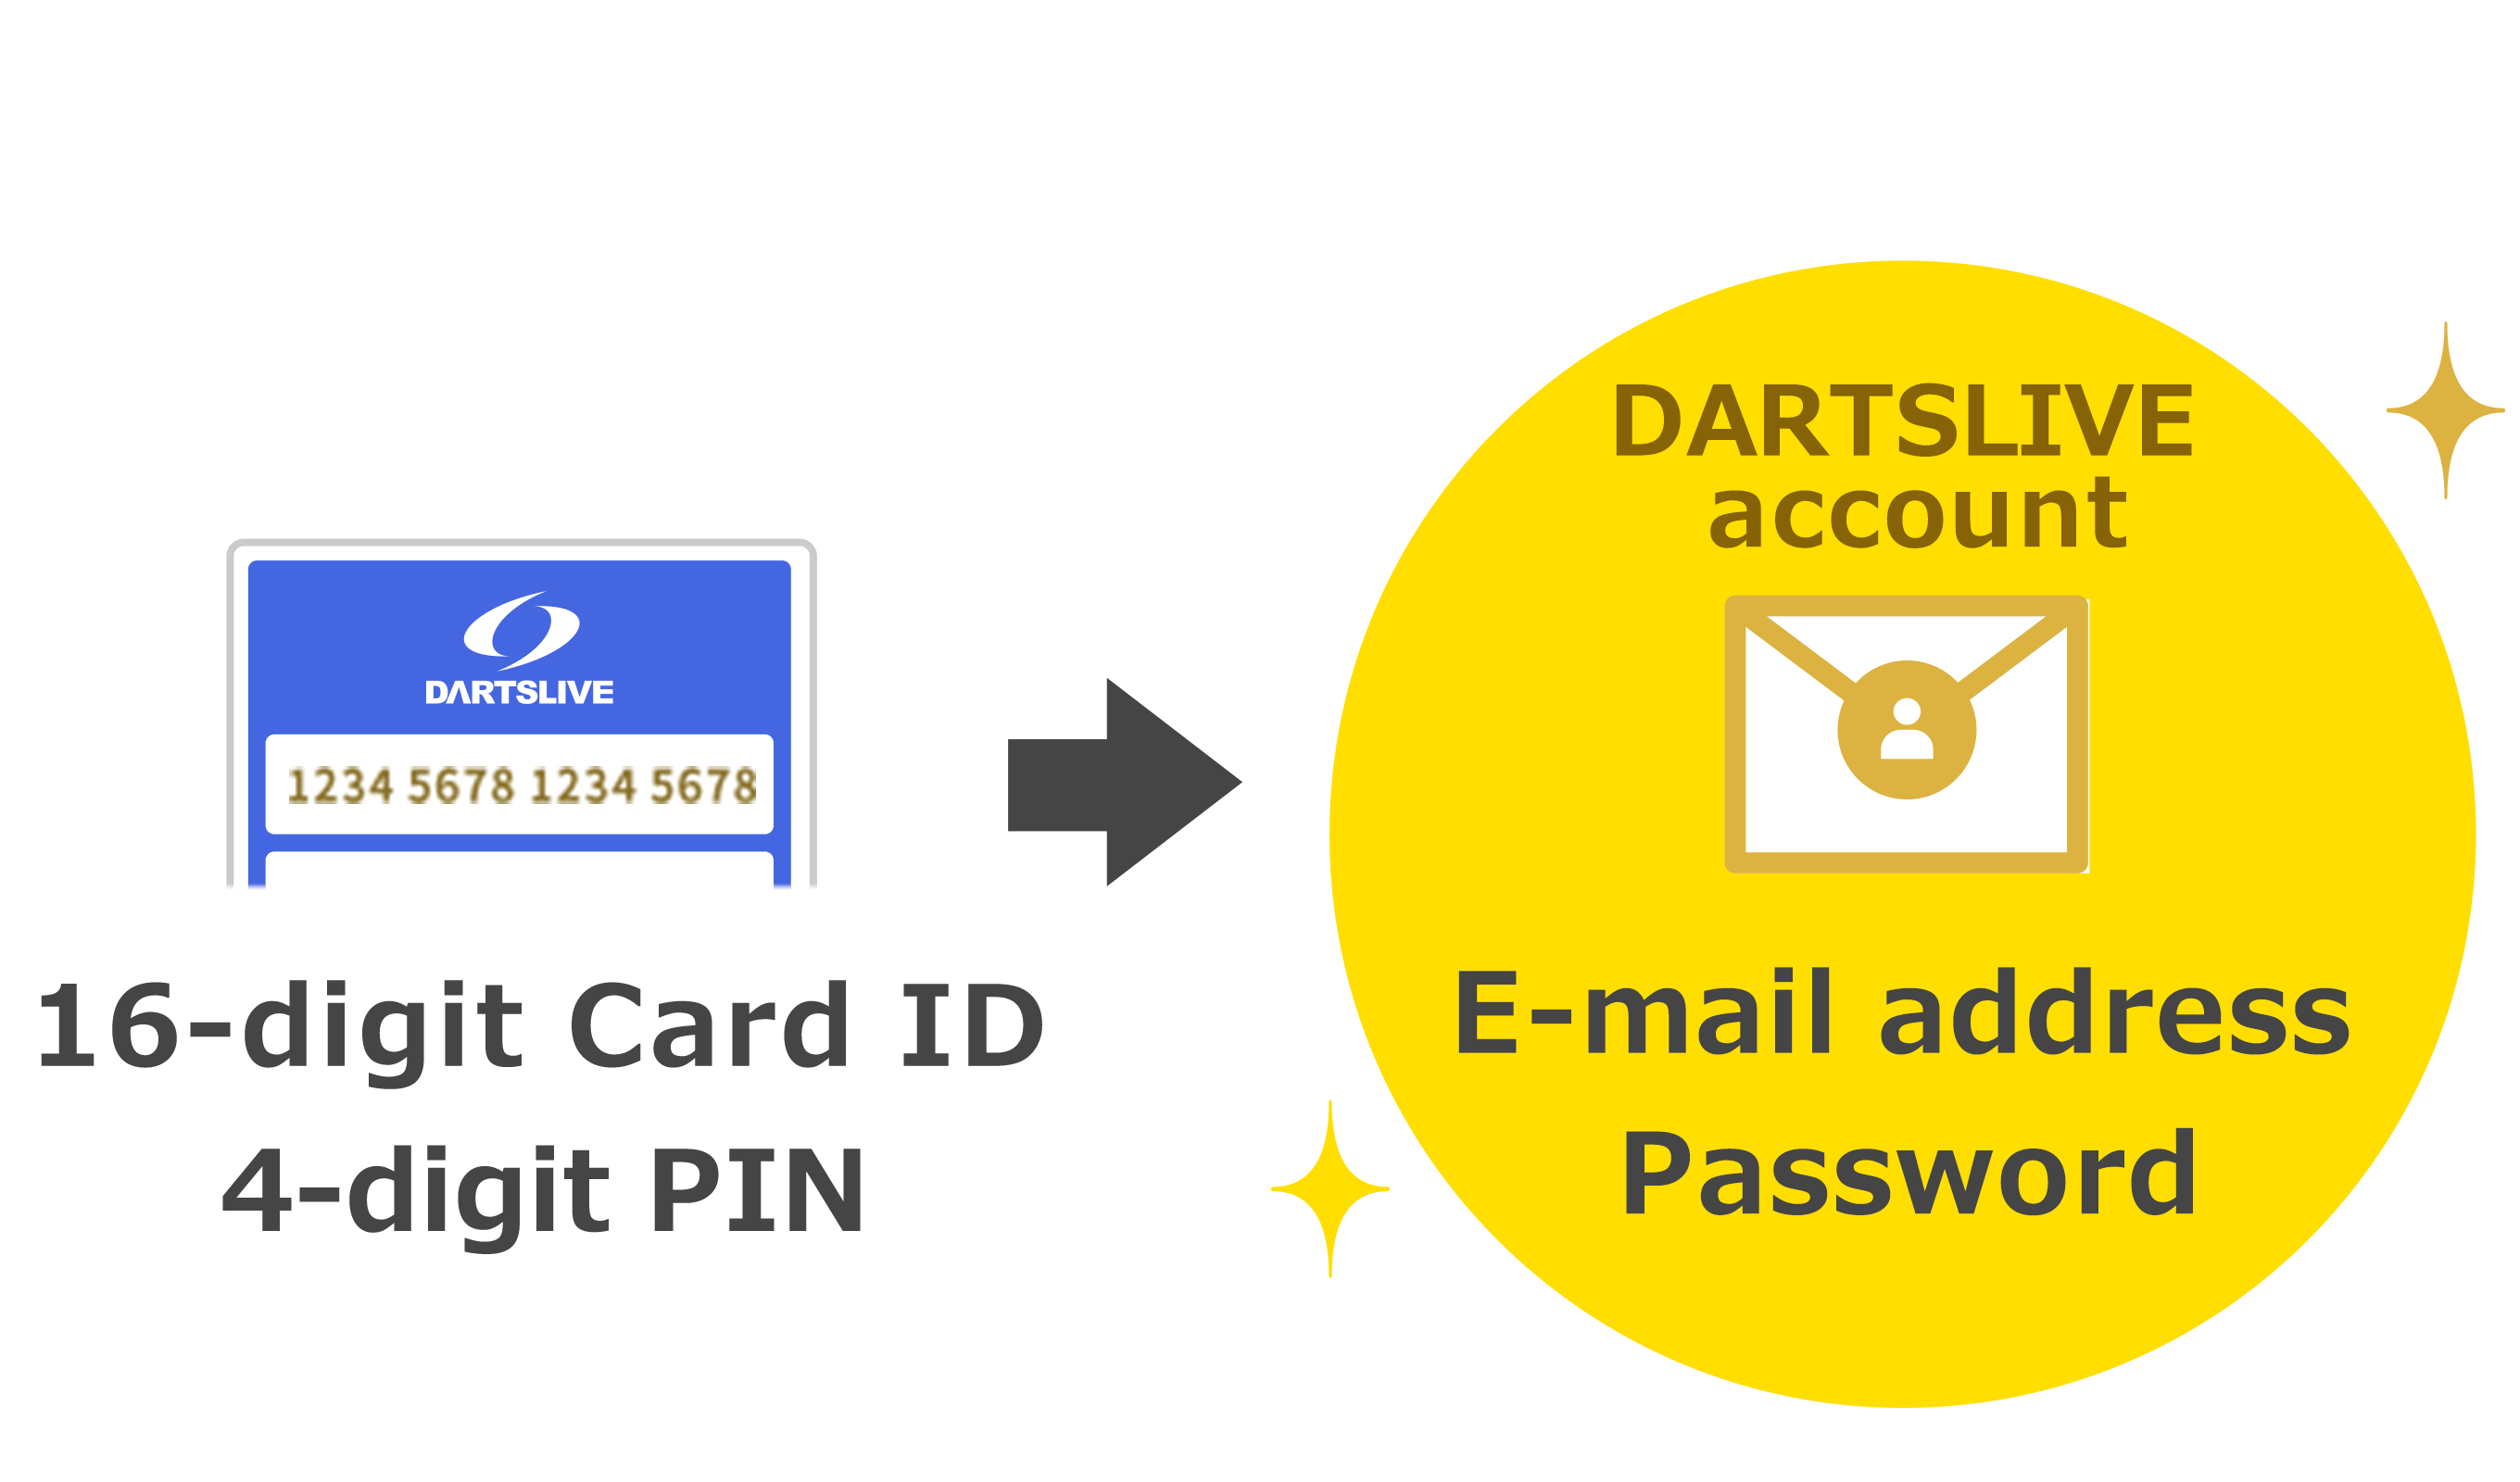 16-digit Card ID 4-digit PIN → DARTSLIVE Account E-mail address Password